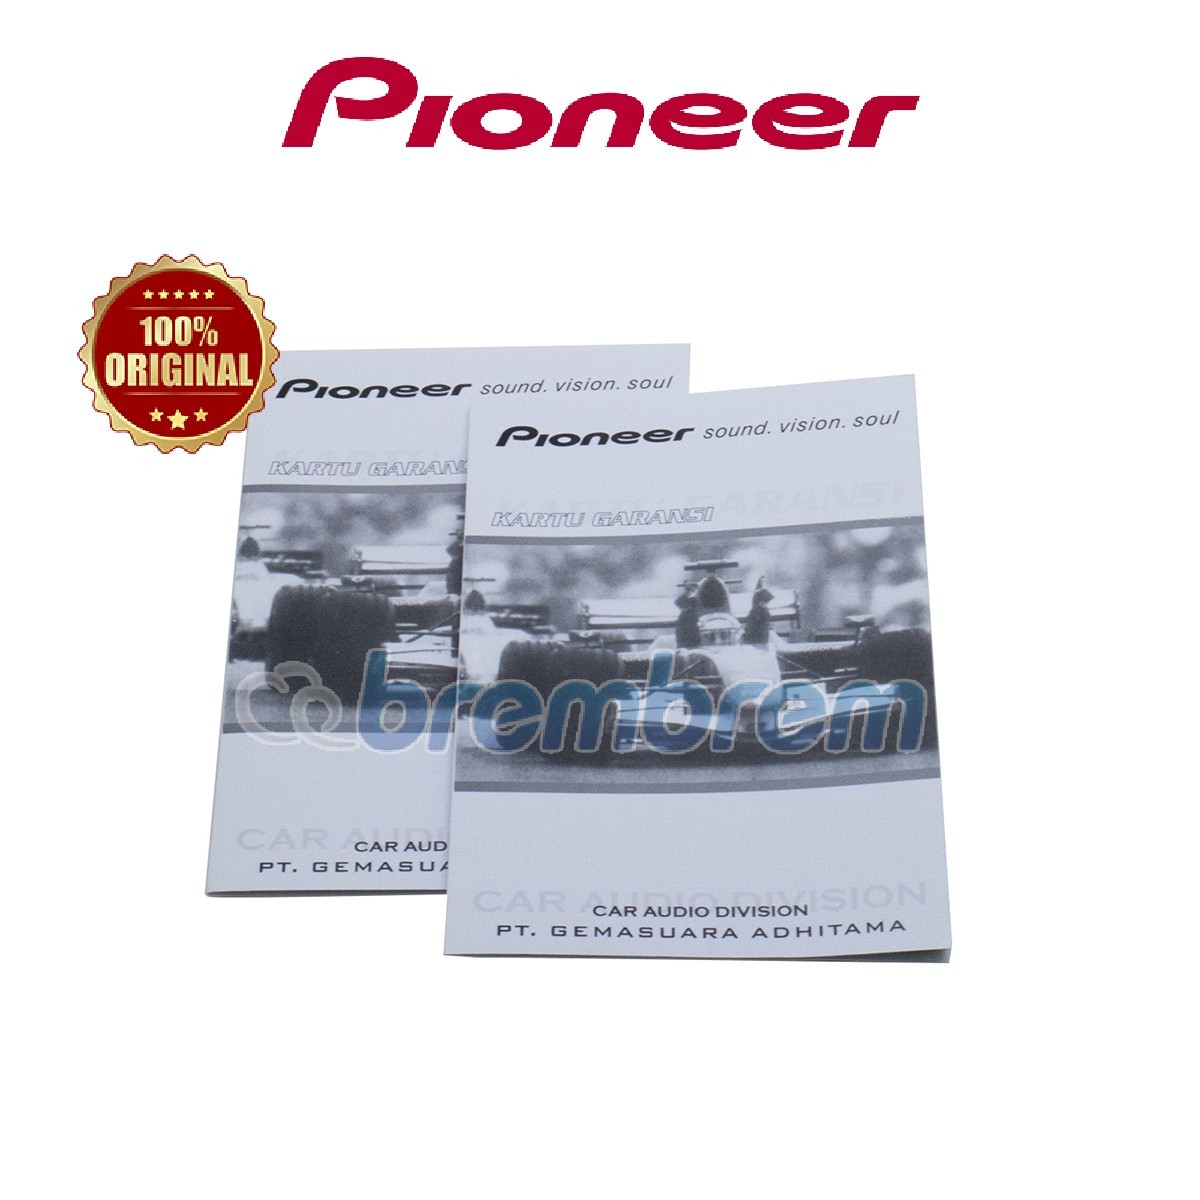 PIONEER TVM PW910T - HEADREST MONITOR